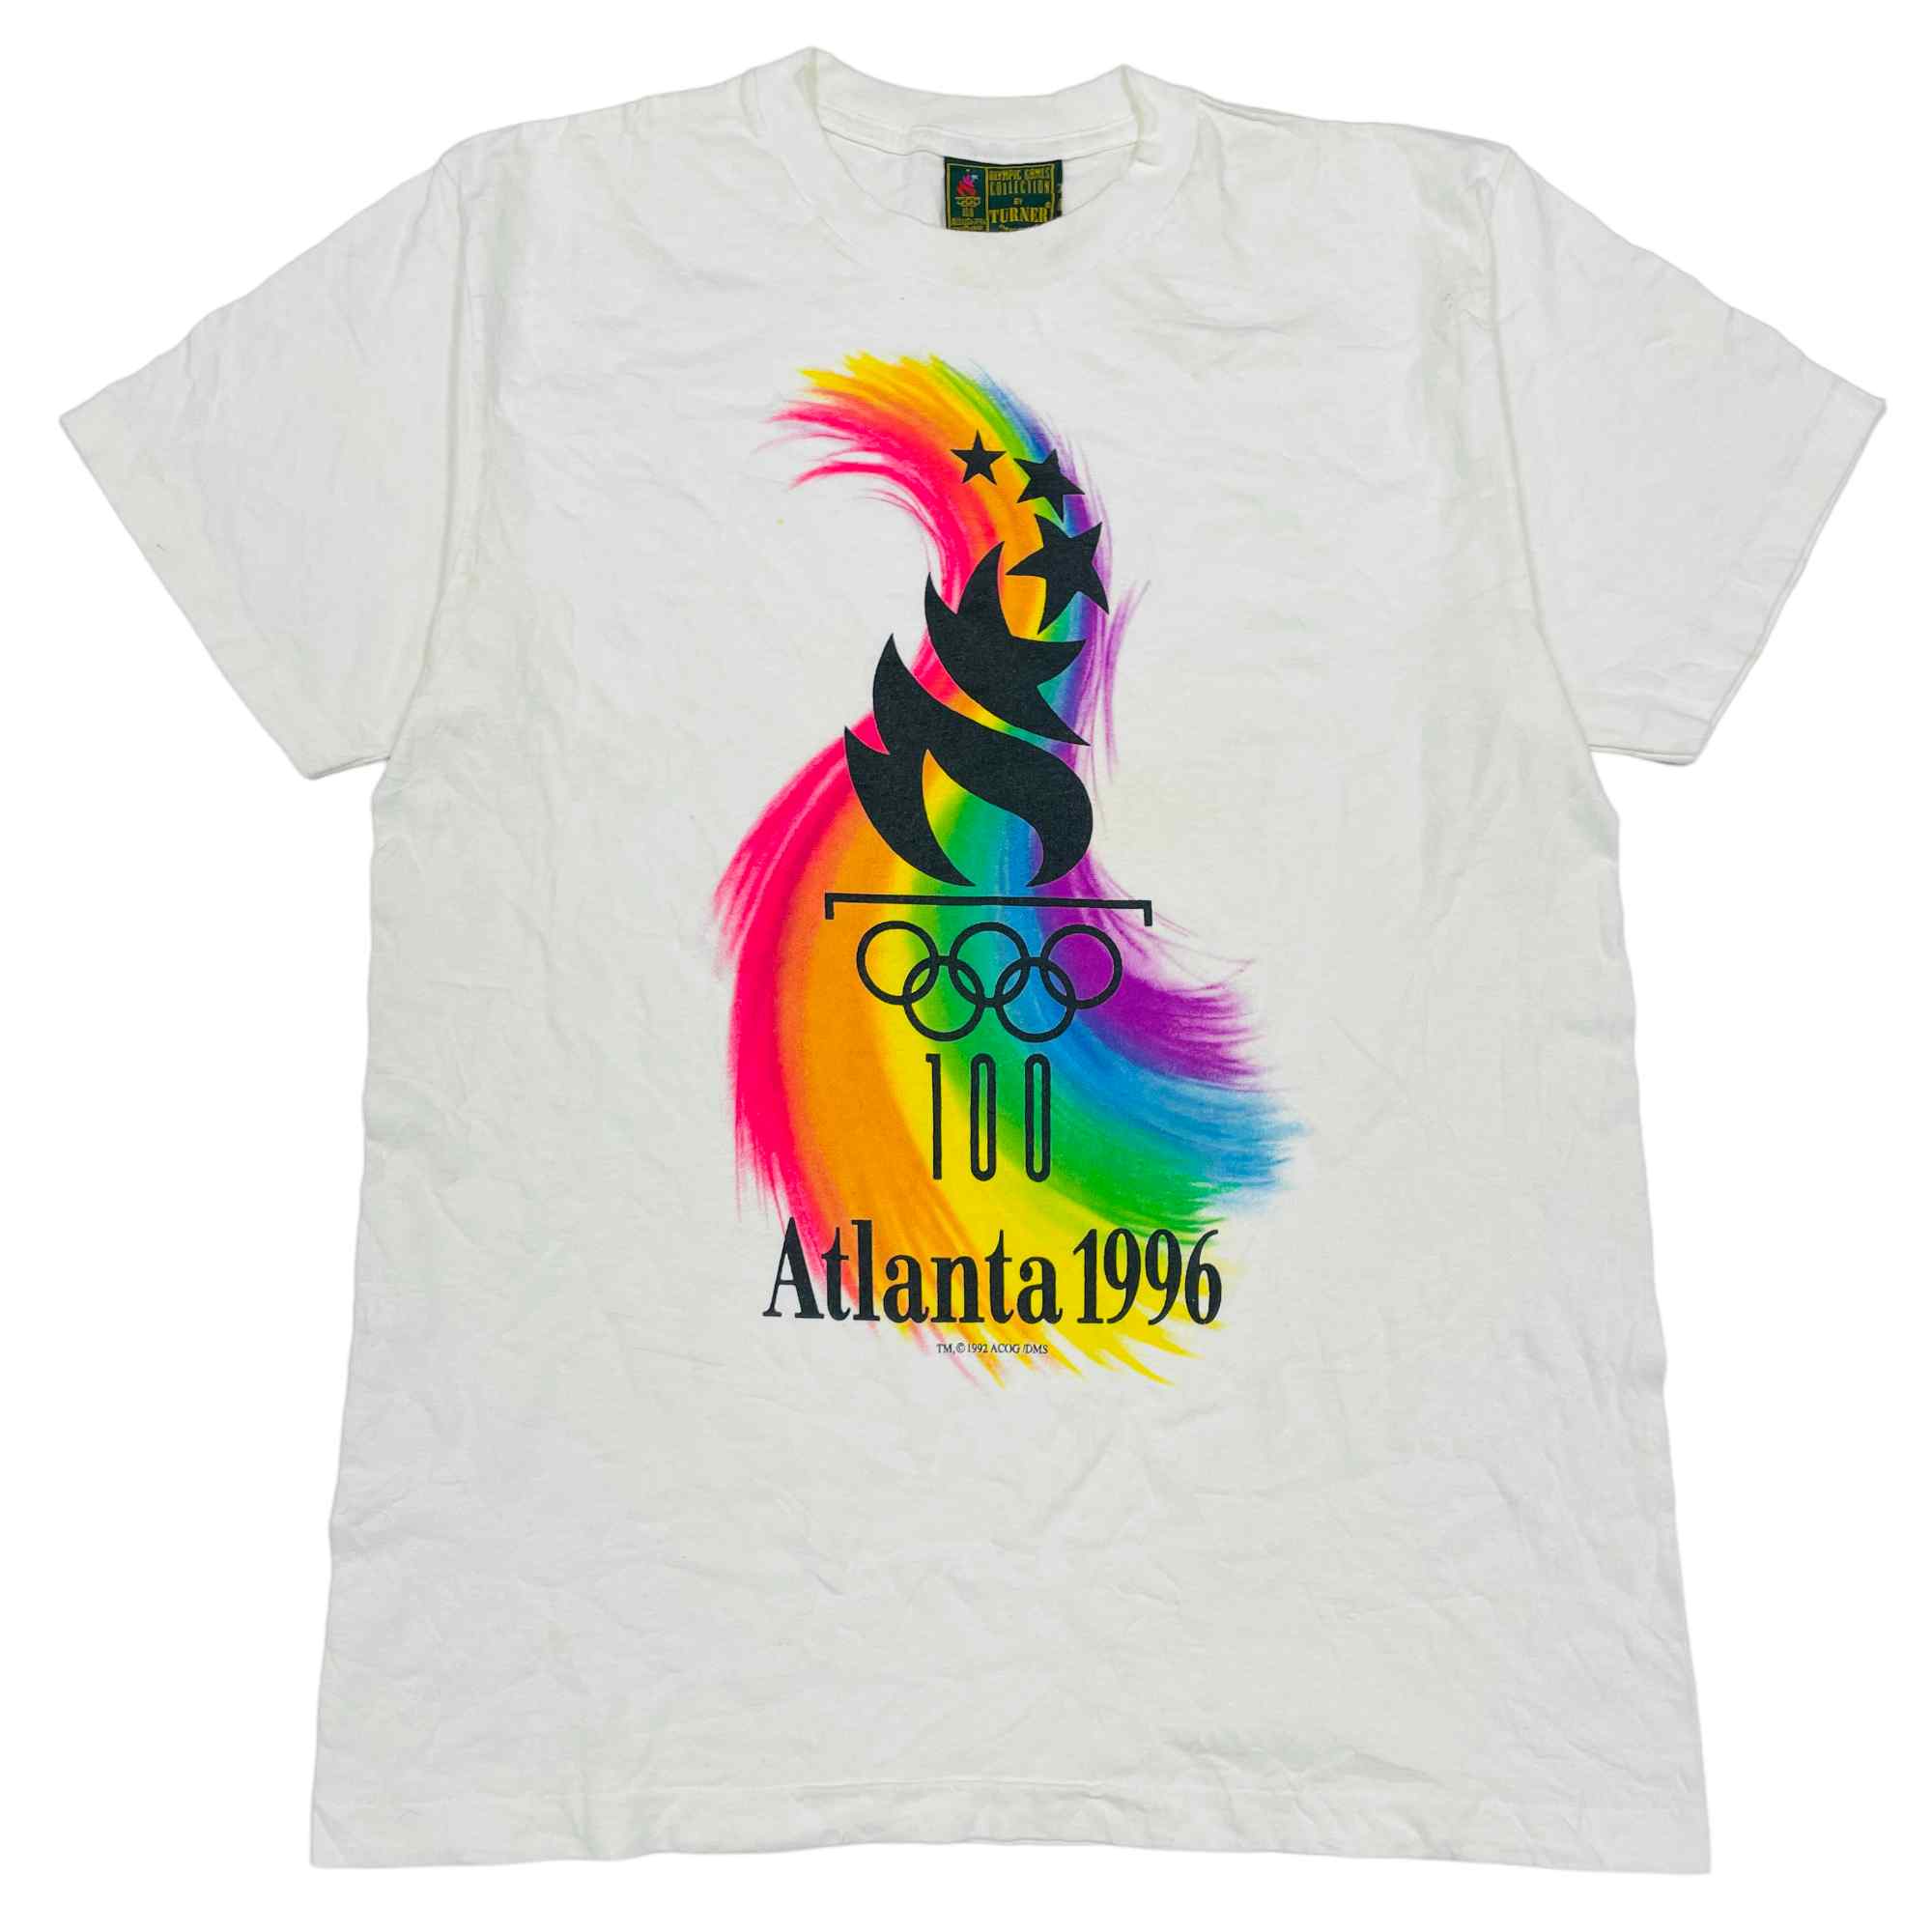 Atlanta 1996 T-Shirt - Large